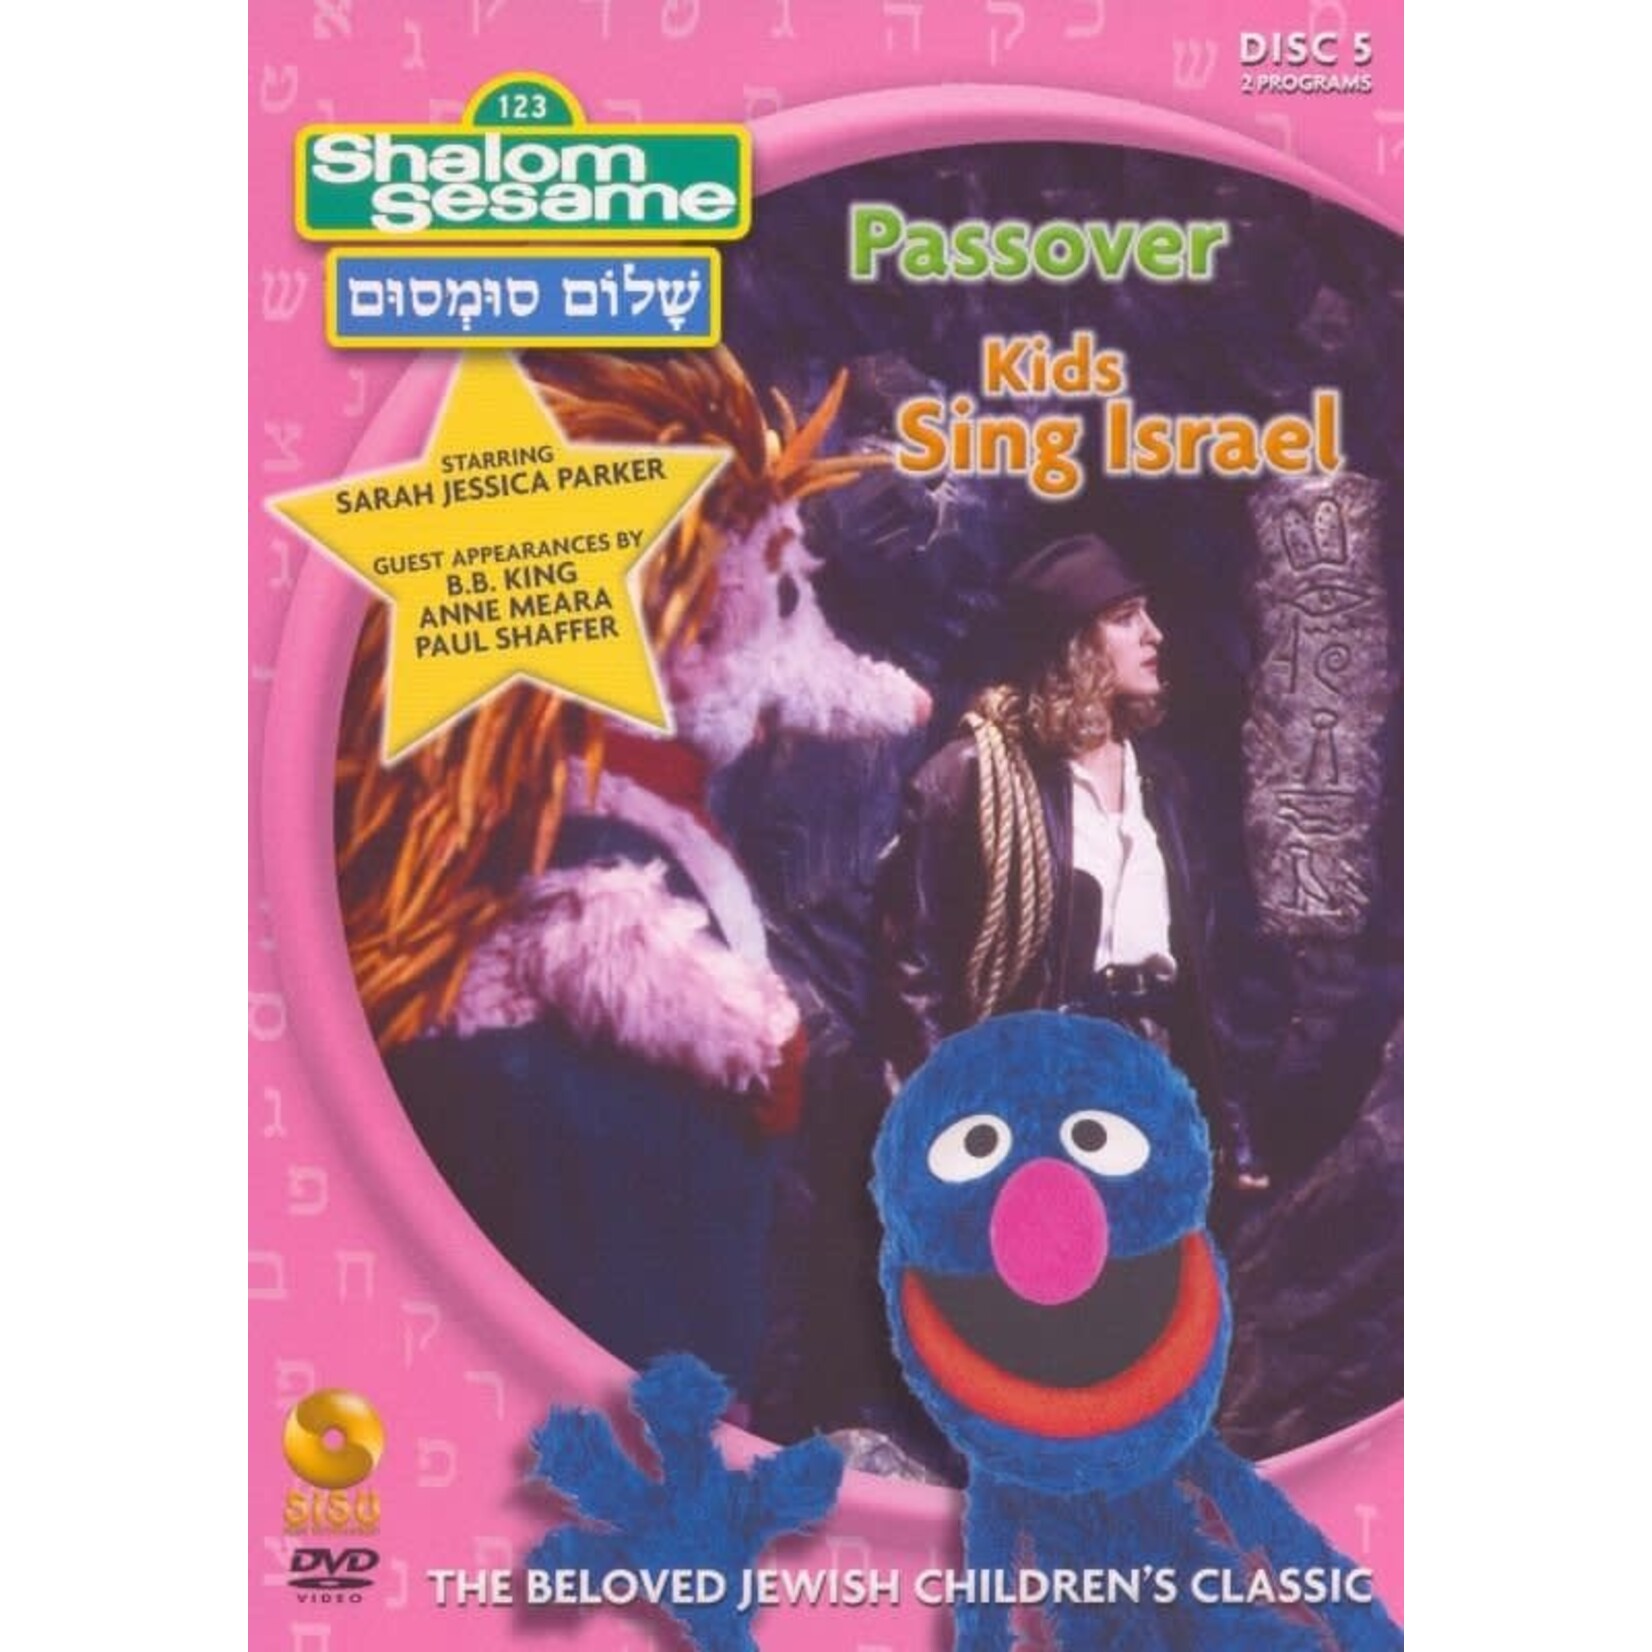 Shalom Sesame DVD -  Passover / Kids Sing Israel